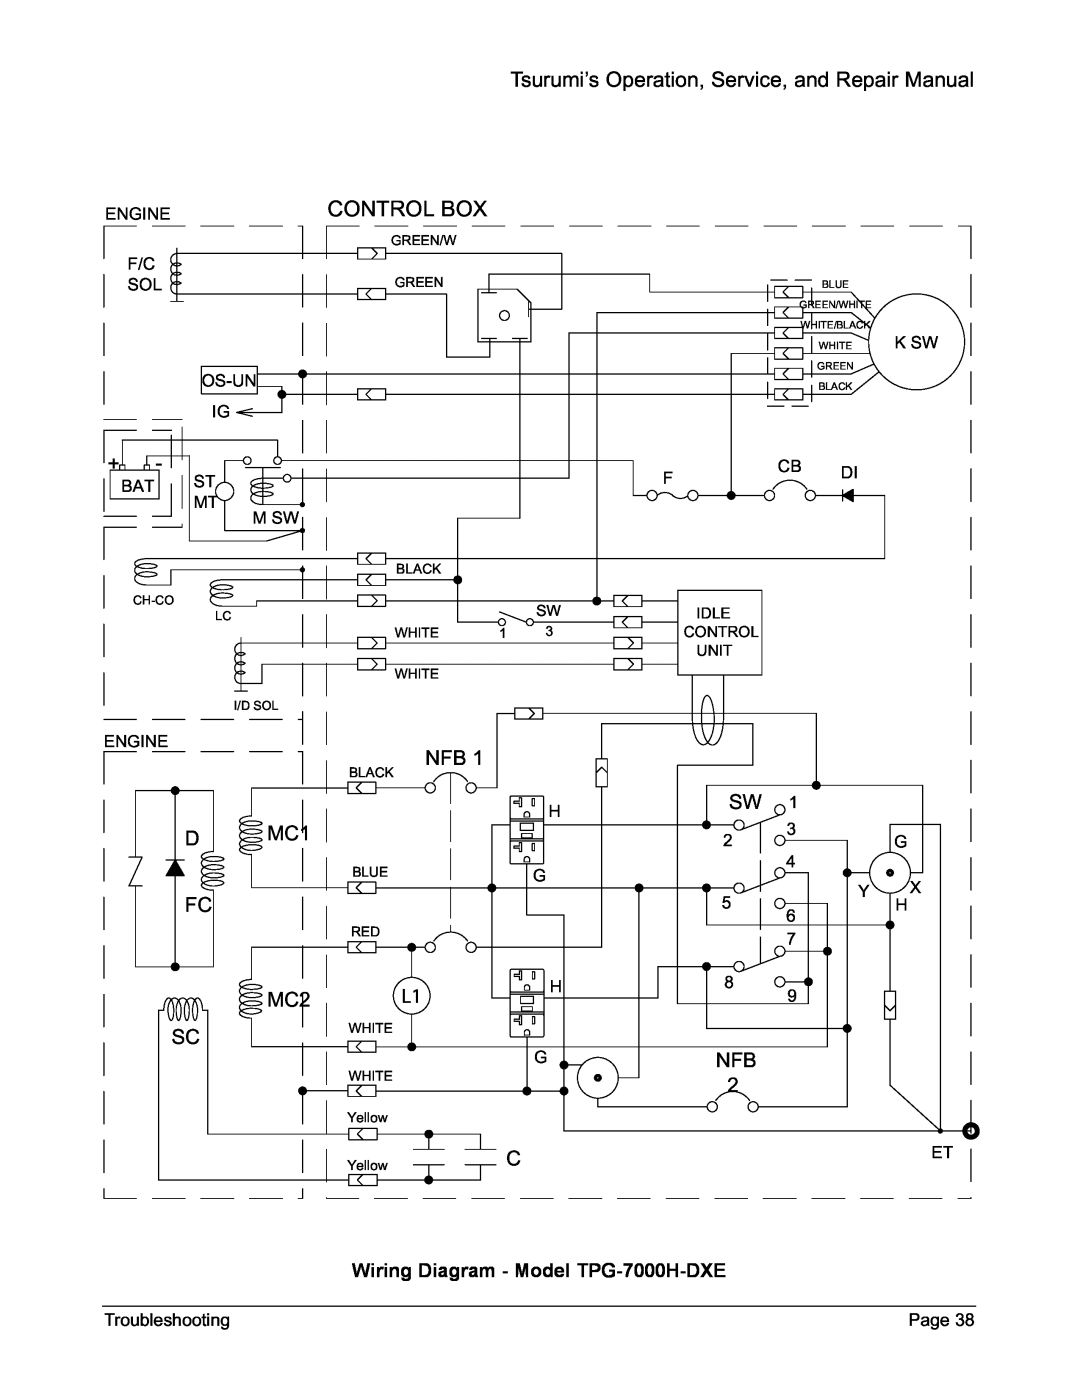 Honda Power Equipment TPG-7000H-DXE, TPG-2900H-DX manual Control Box, Tsurumi’s Operation, Service, and Repair Manual 